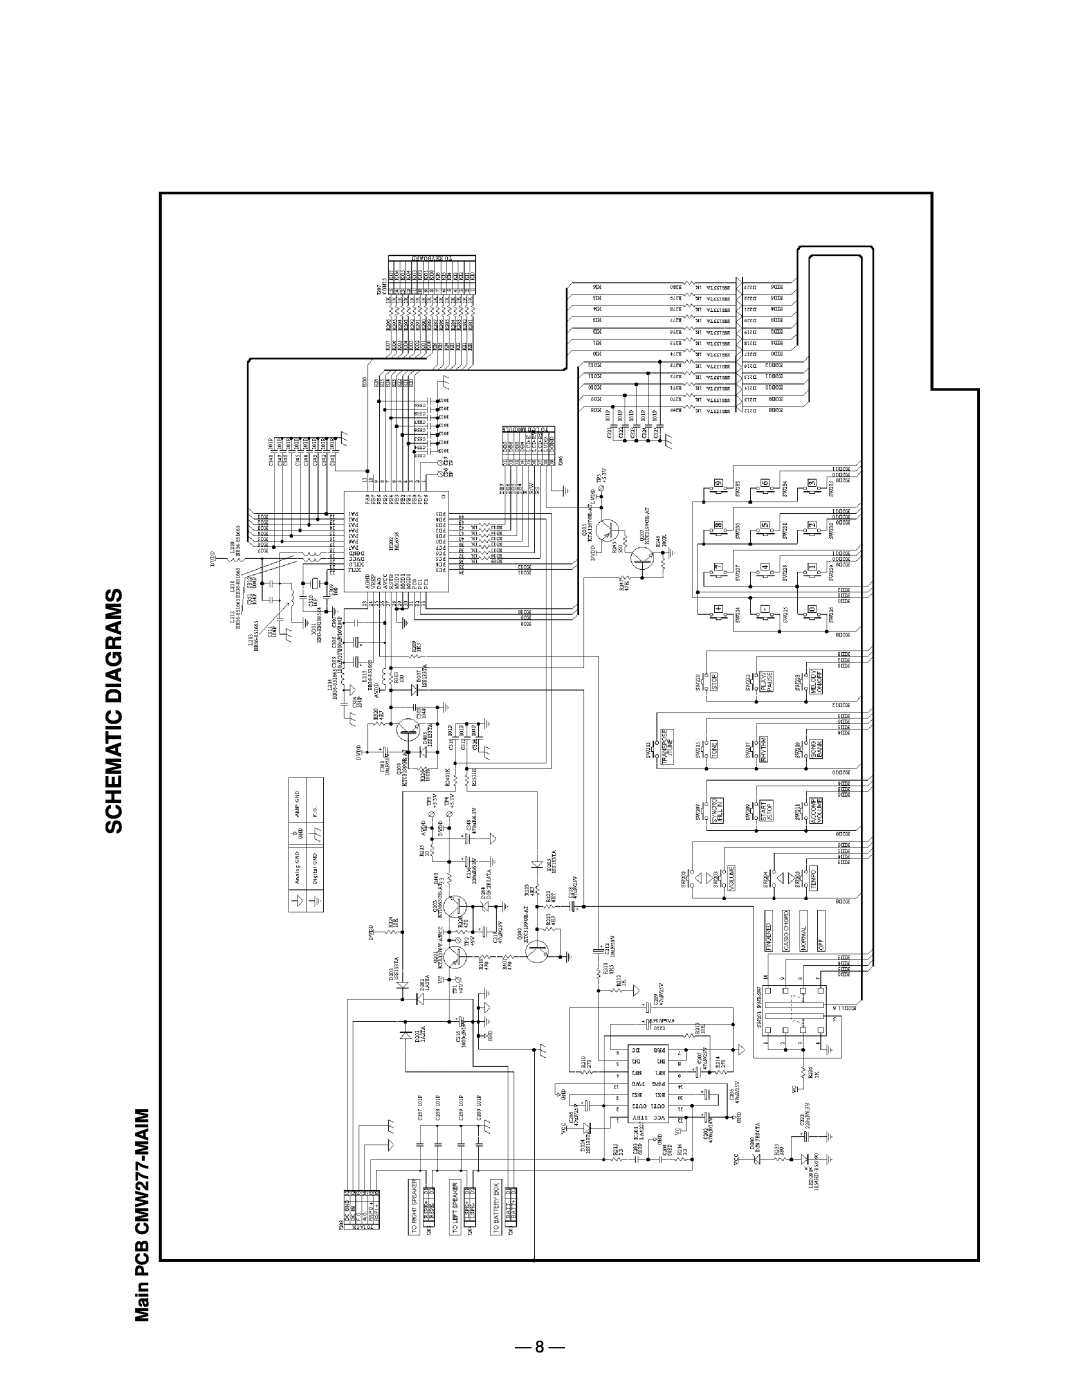 Casio CTK-230 Sep. 2003 manual Schematic Diagrams, Main PCB CMW277-MAIM 